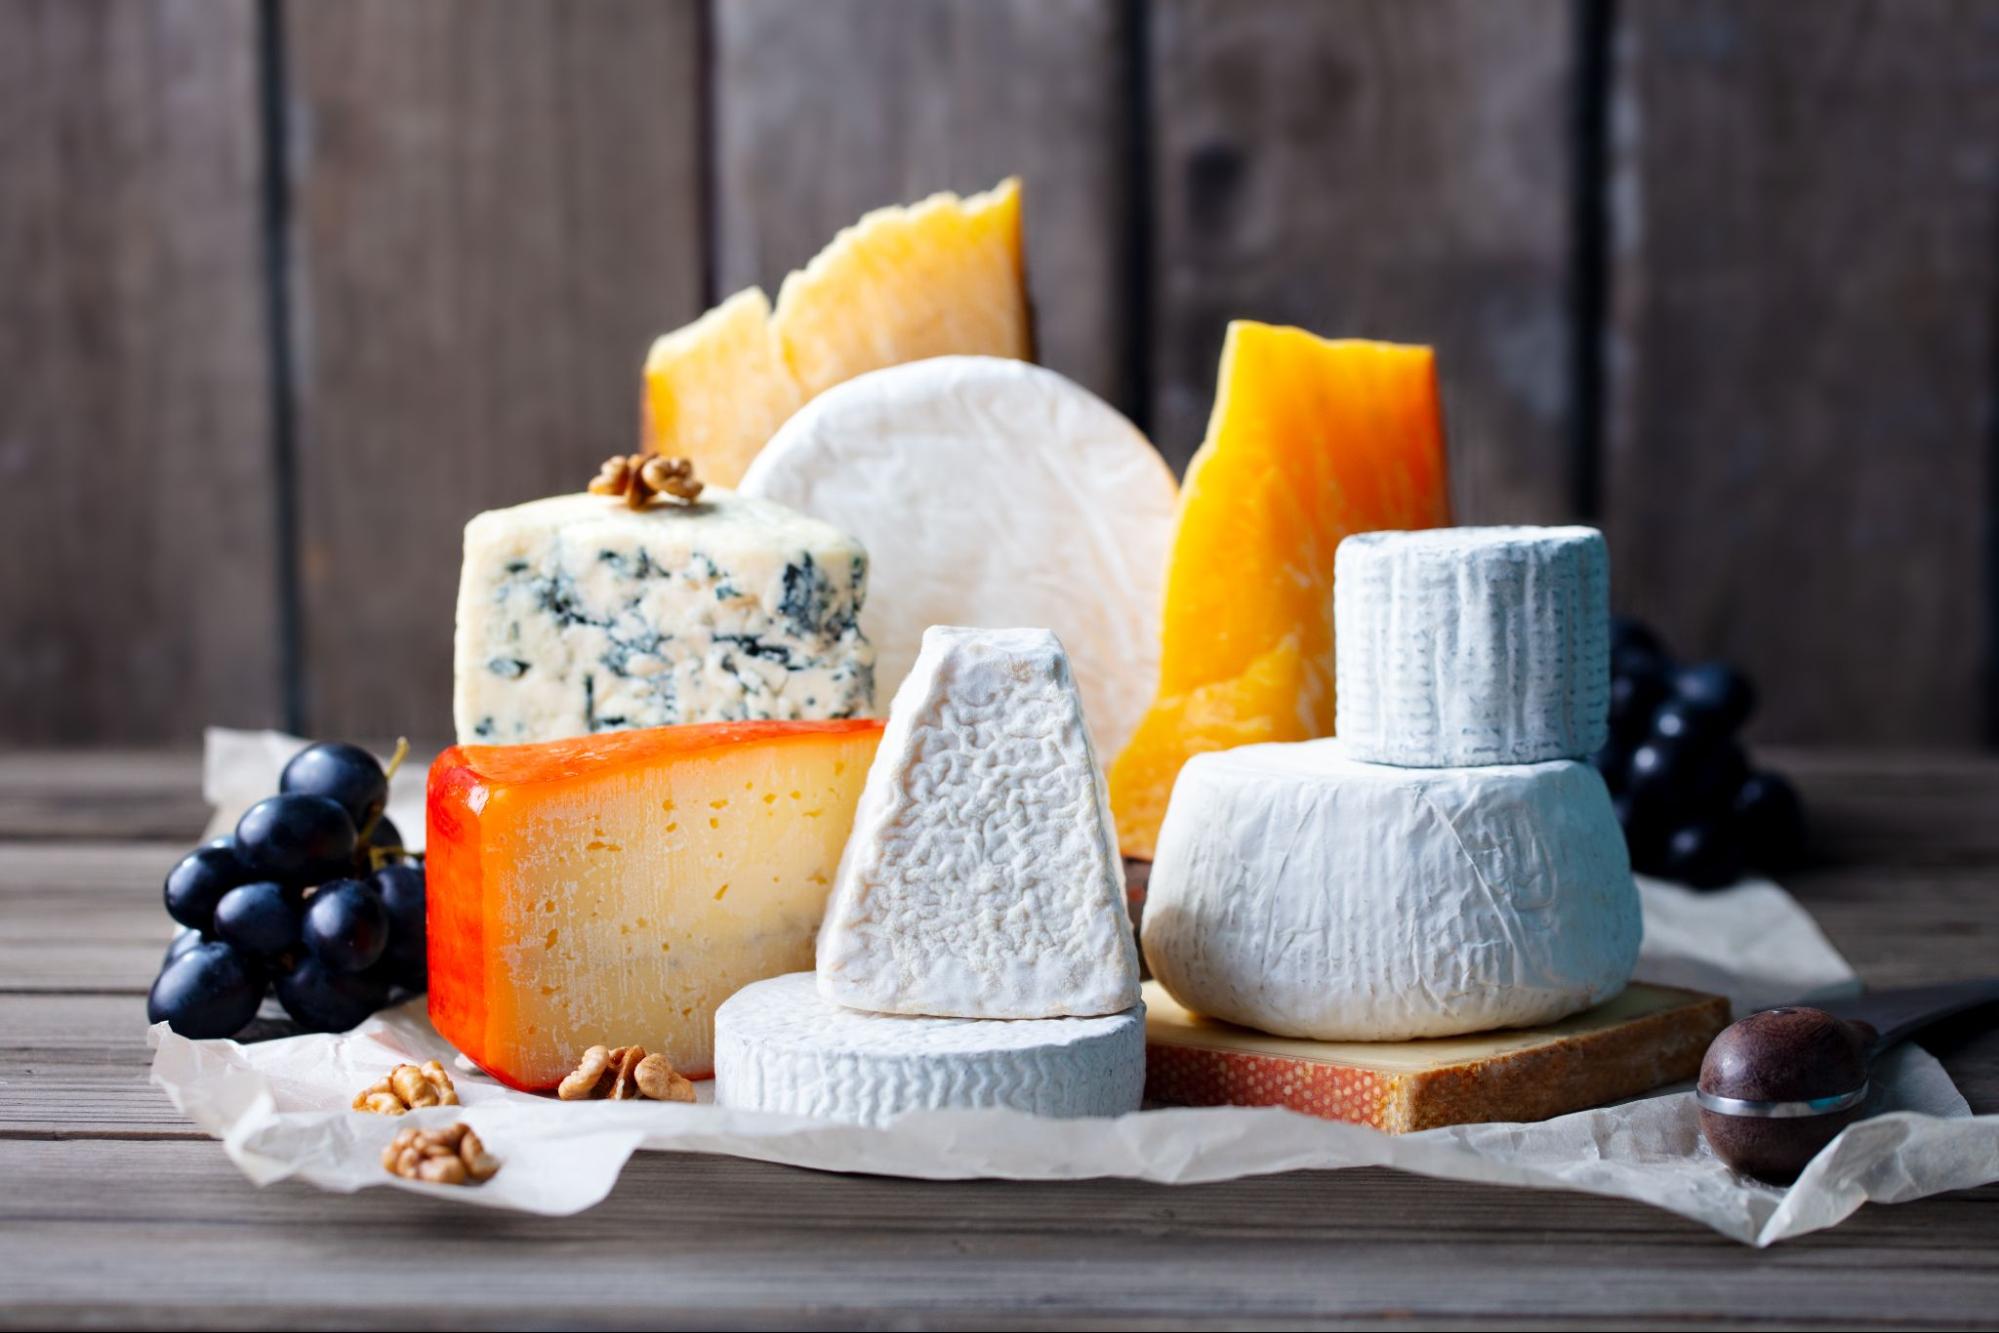 Cheese, a calorie-dense food